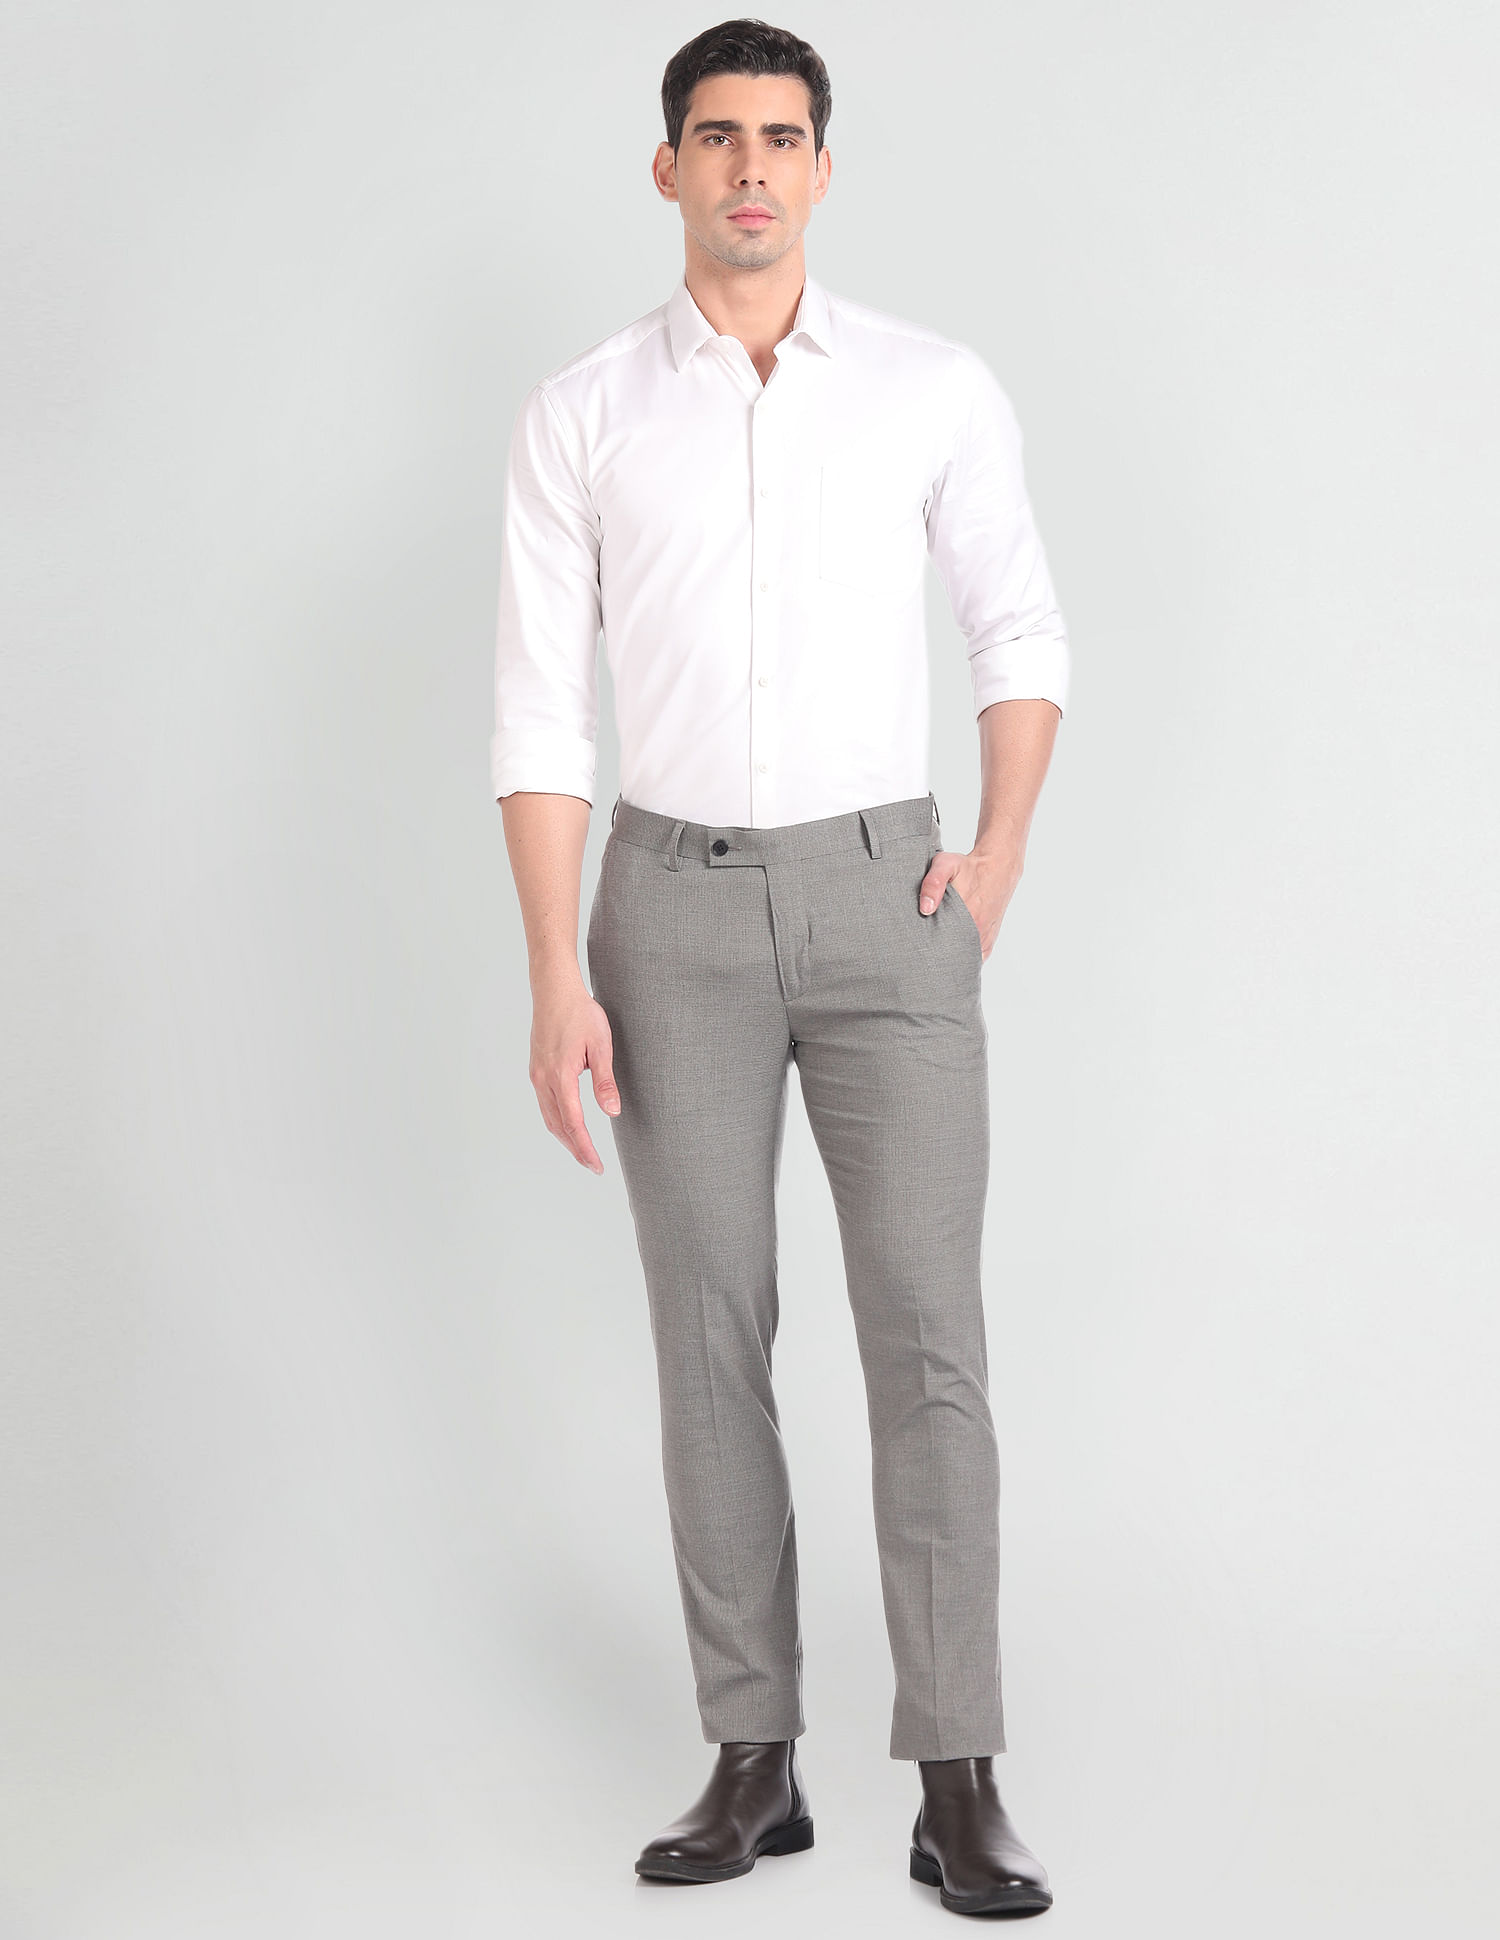 Buy Grey Formal Trousers Online in India at Best Price - Westside